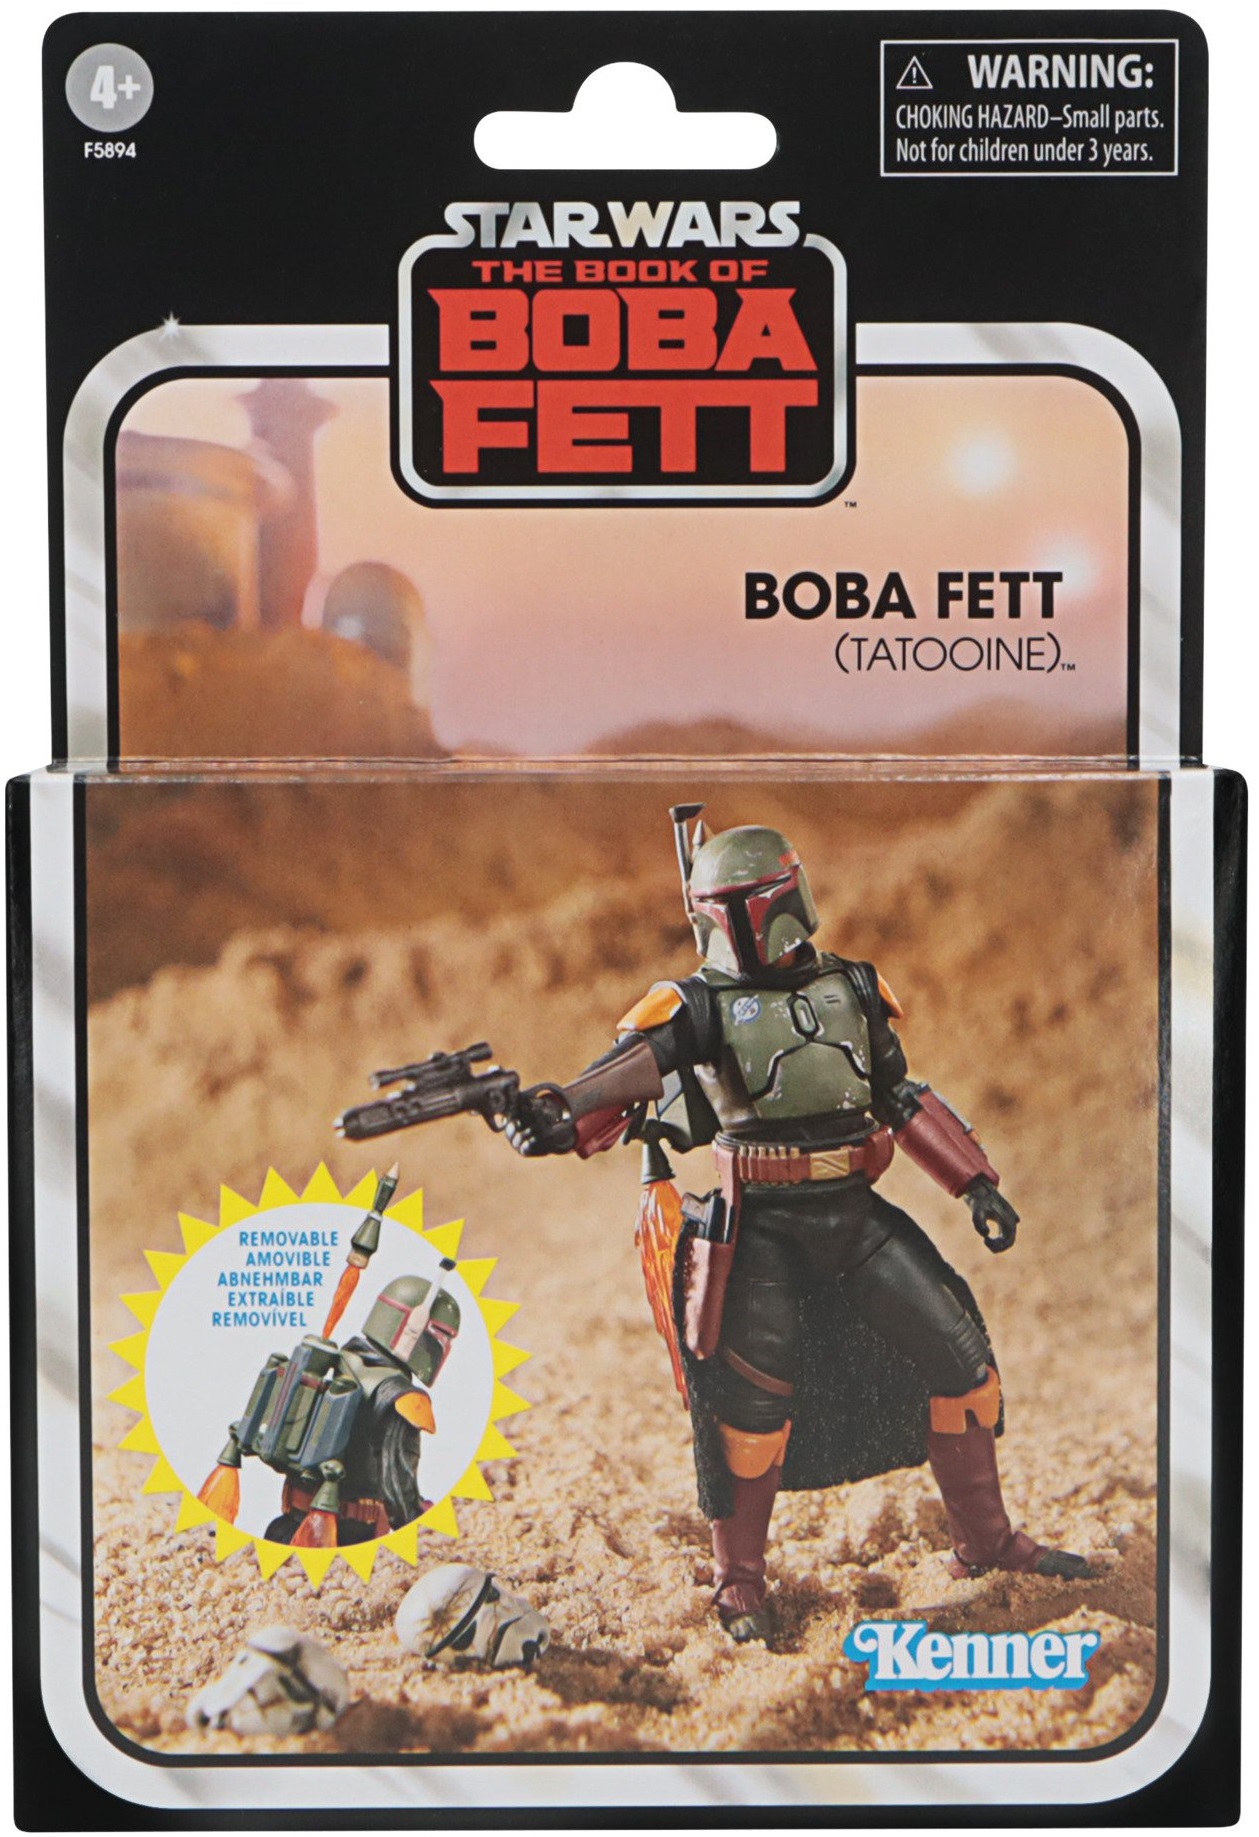 Star Wars: The Book of Boba Fett Vintage Collection Actionfigur 2022 Boba Fett (Tatooine) 10 cm F58945L0 5010994126377